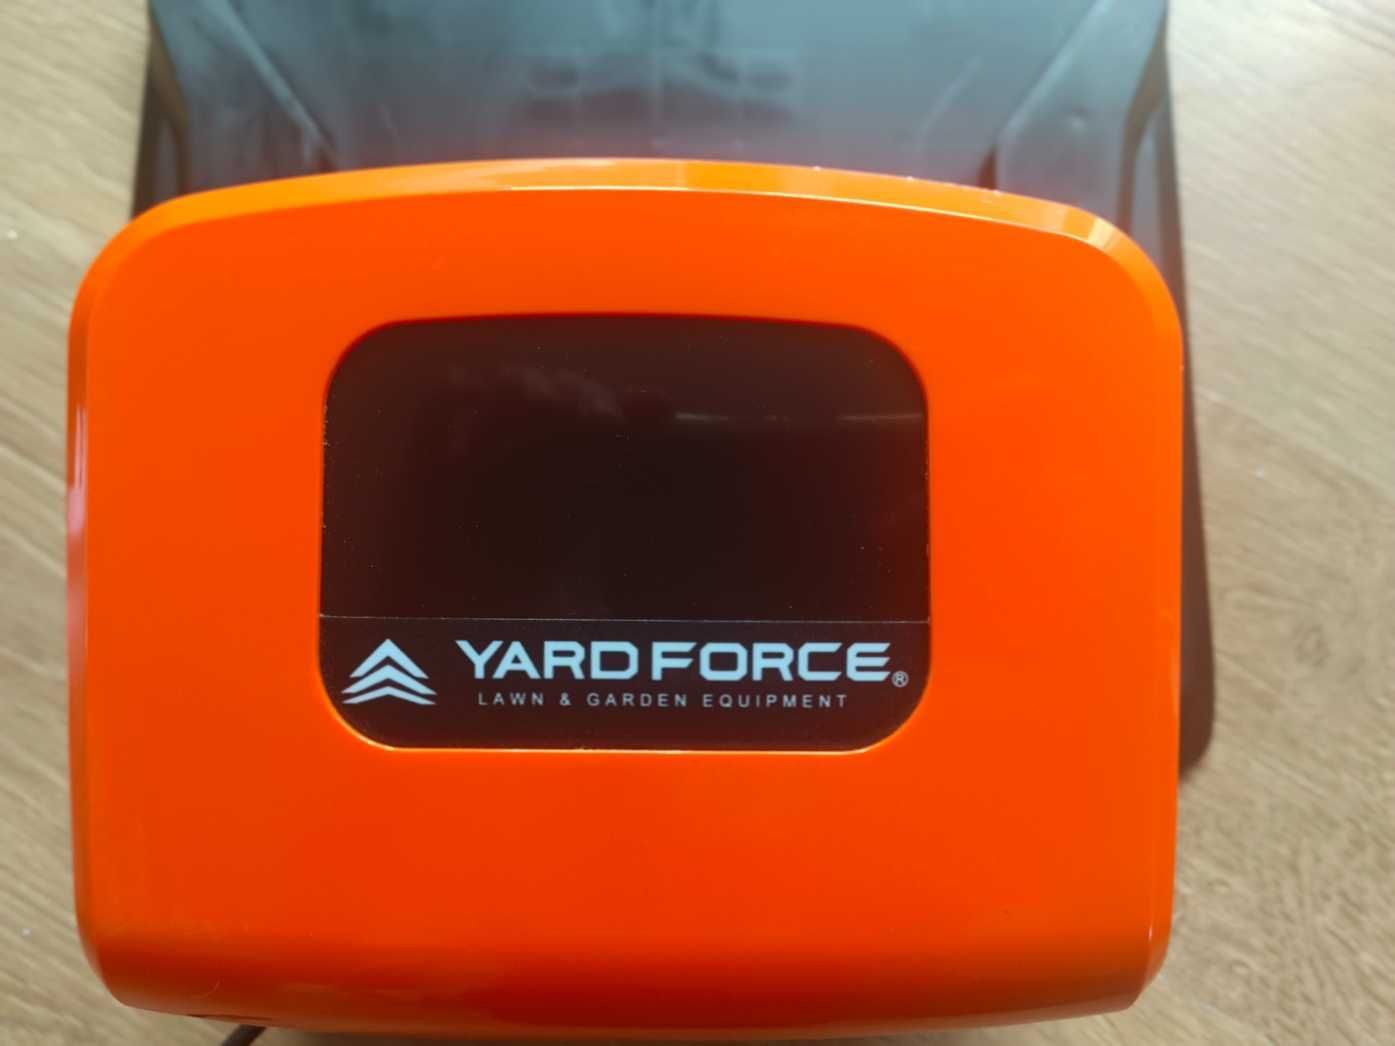 Stacja ładująca yard force do robota  Yard force COMPACT 300RBS